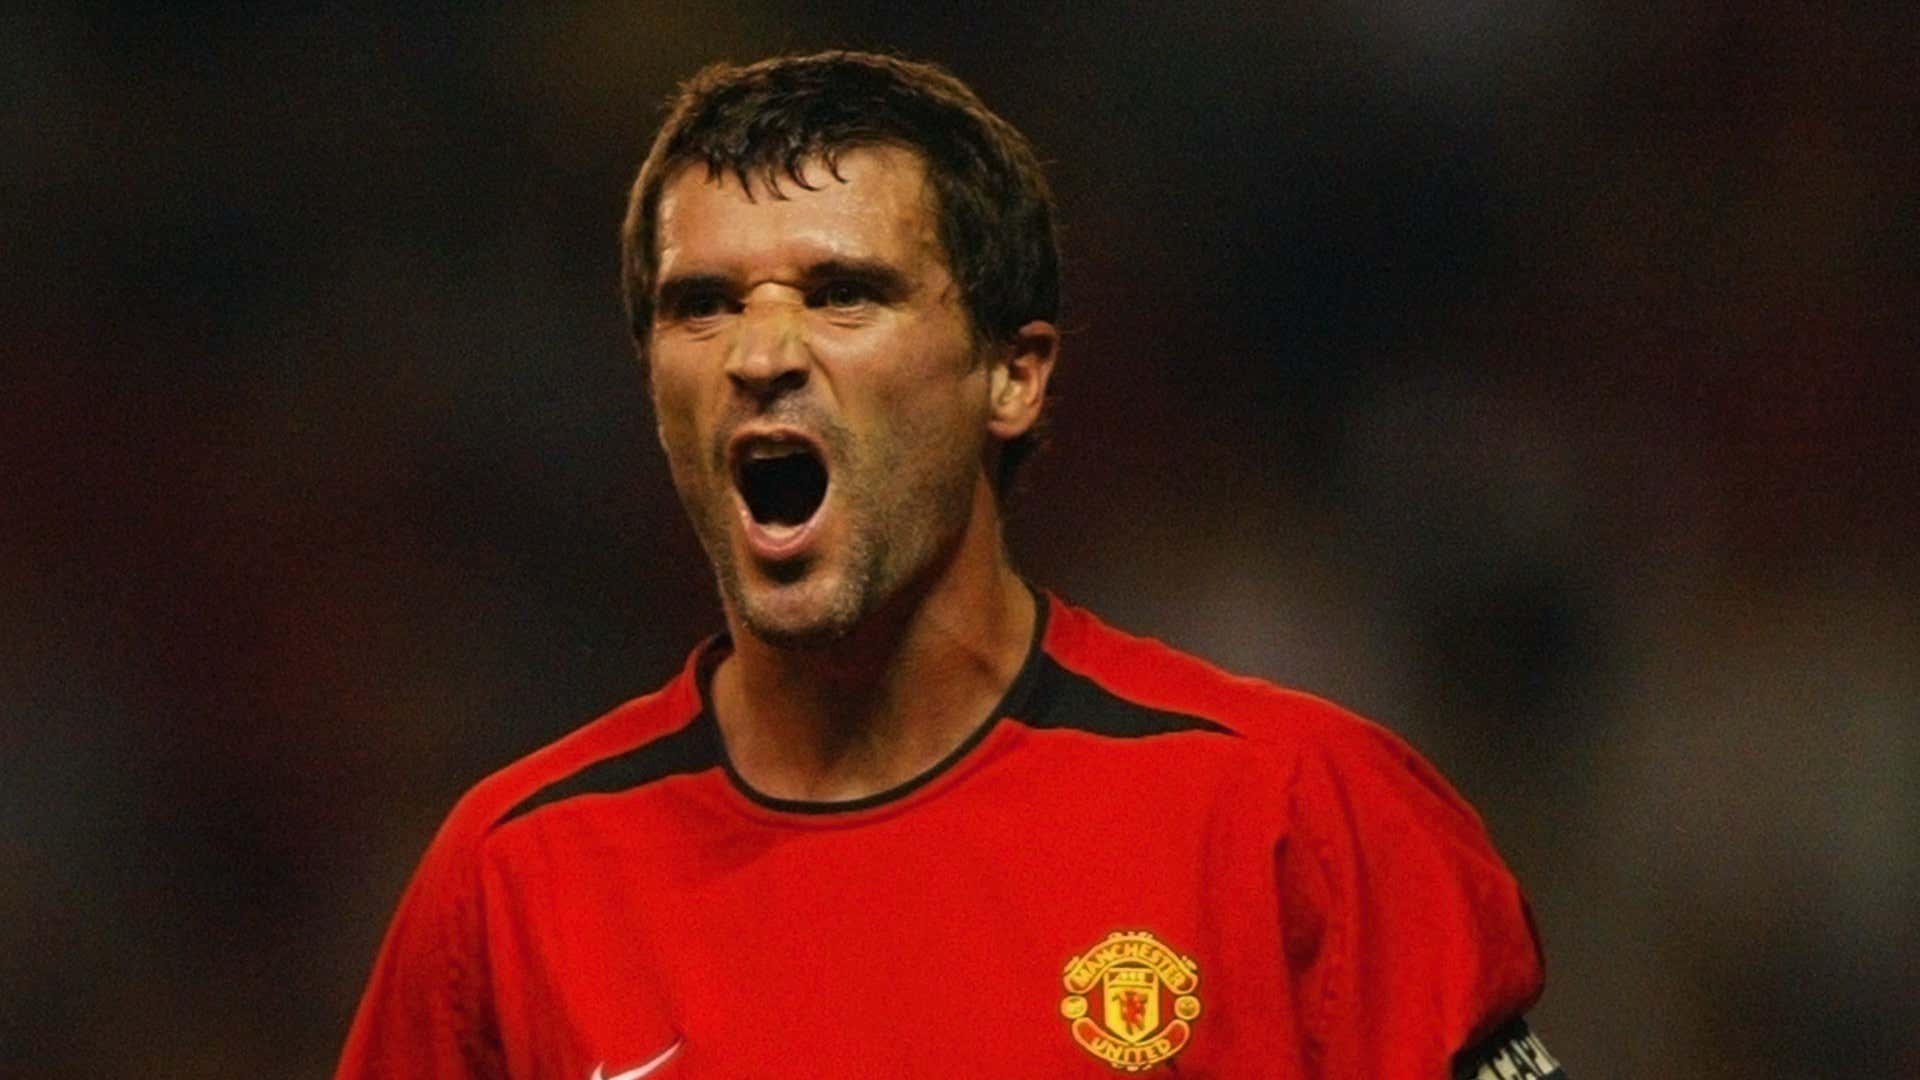 'Roy Keane takes no prisoners' - Paul McShane opens up on ex-Man Utd captain, Ferguson and inspiring